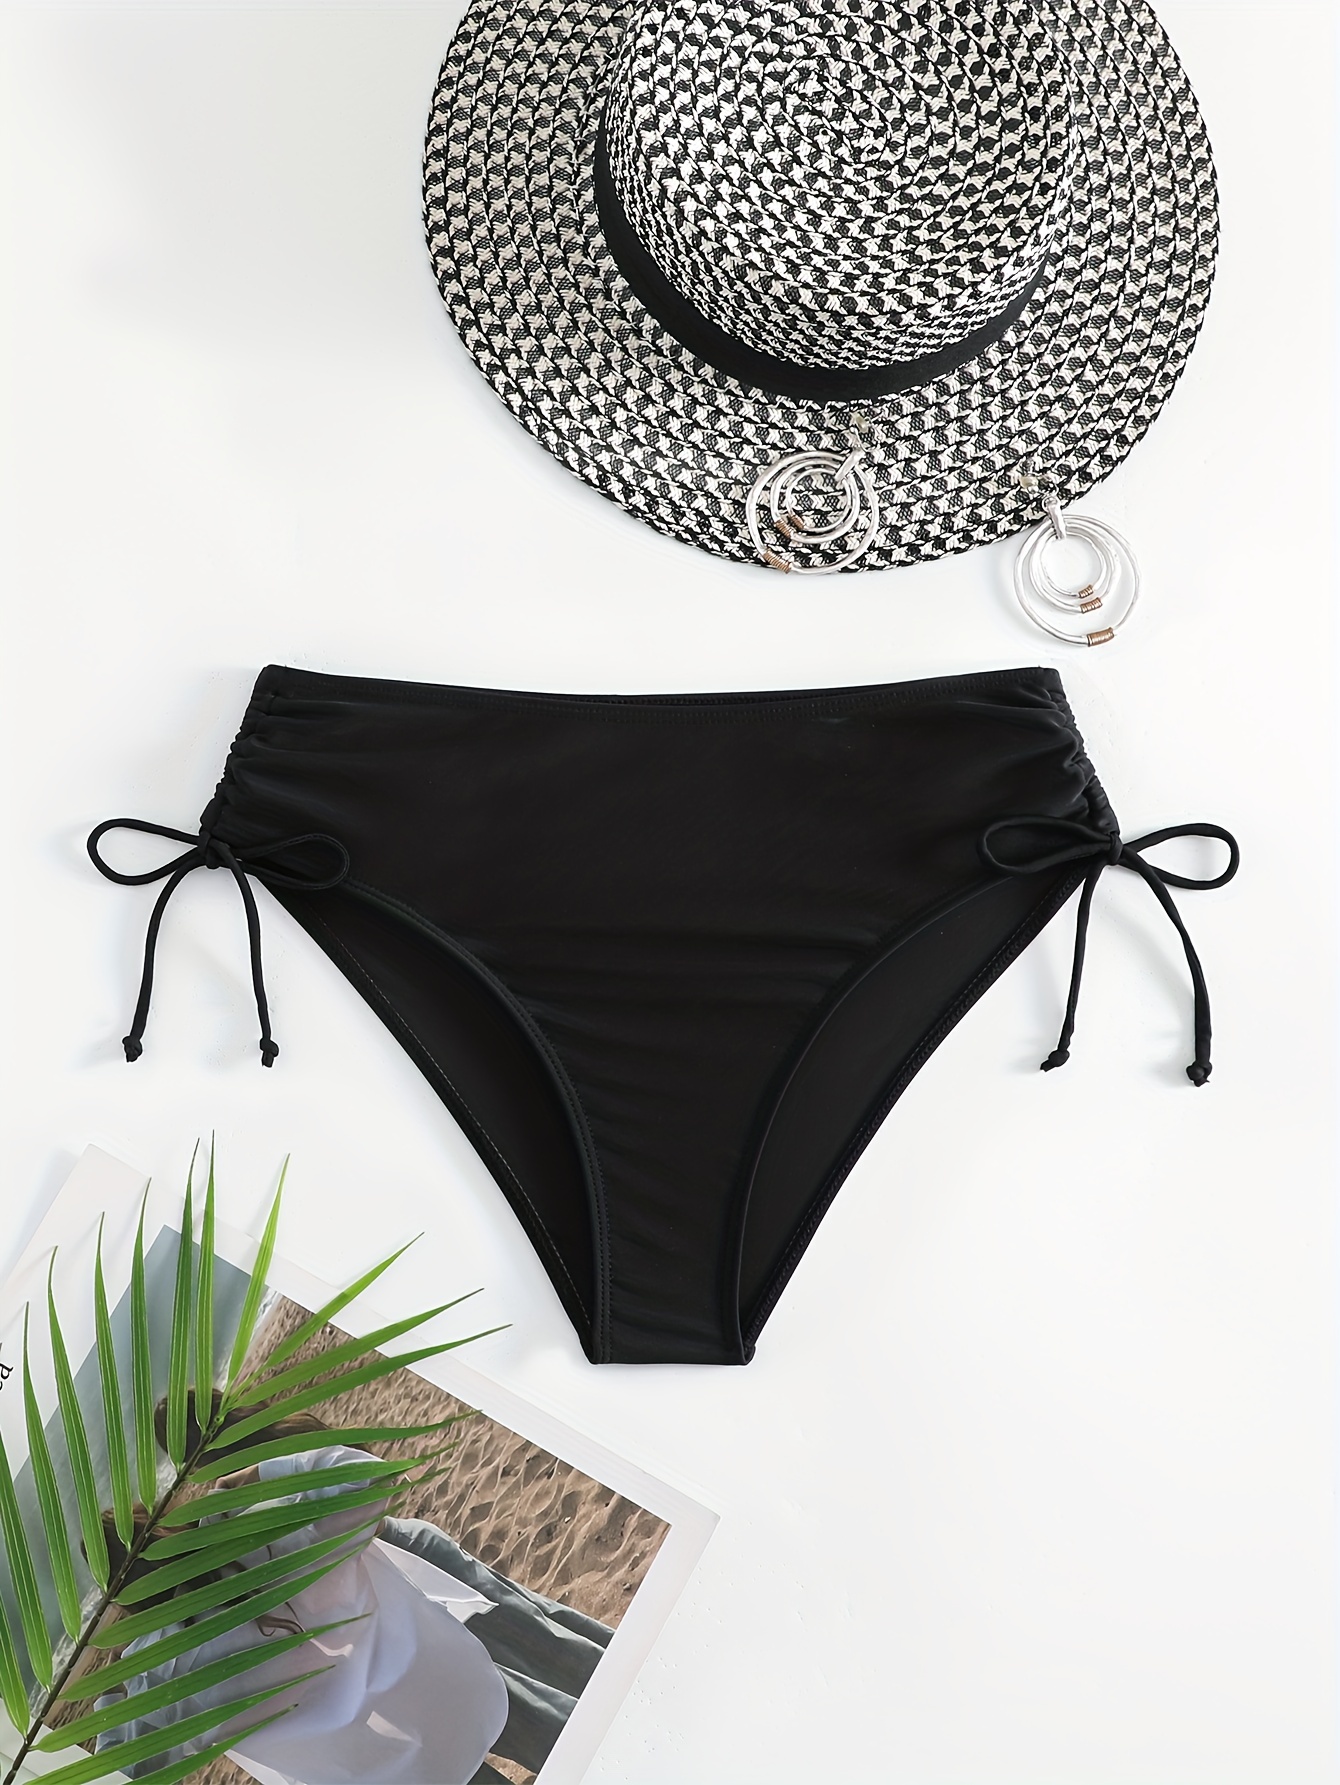 Cut Out Solid Black Swim Briefs, Stretchy High Cut Thong Bikini Bottoms,  Women's Swimwear & Clothing